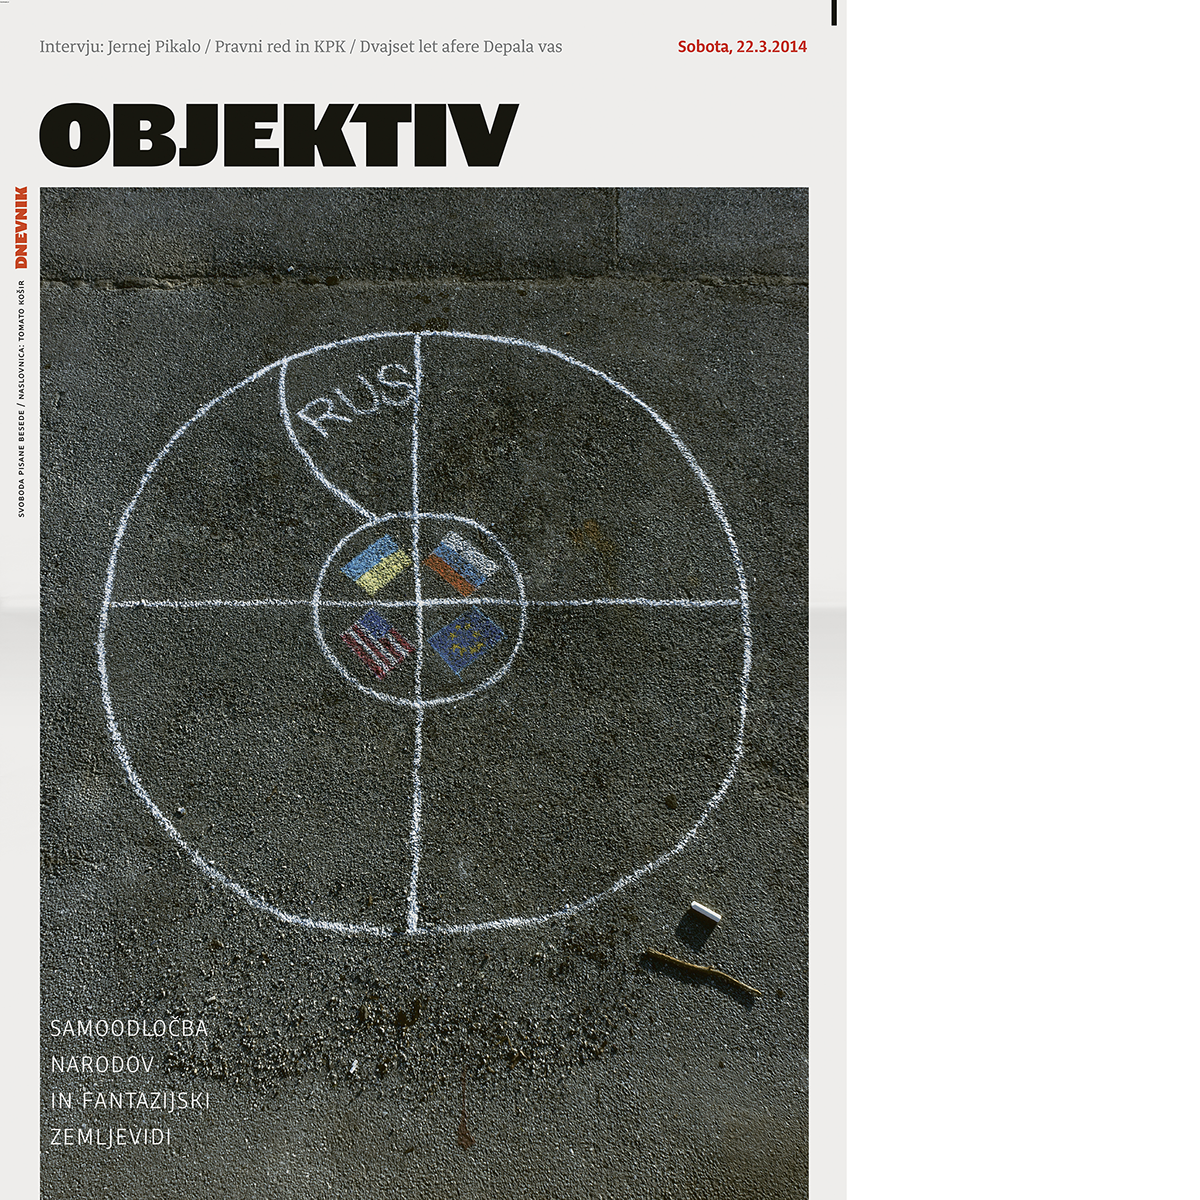 newspaper cover political provocative award ADC slovenia TomatoKosir magazine frontpage ad ads photoillustration